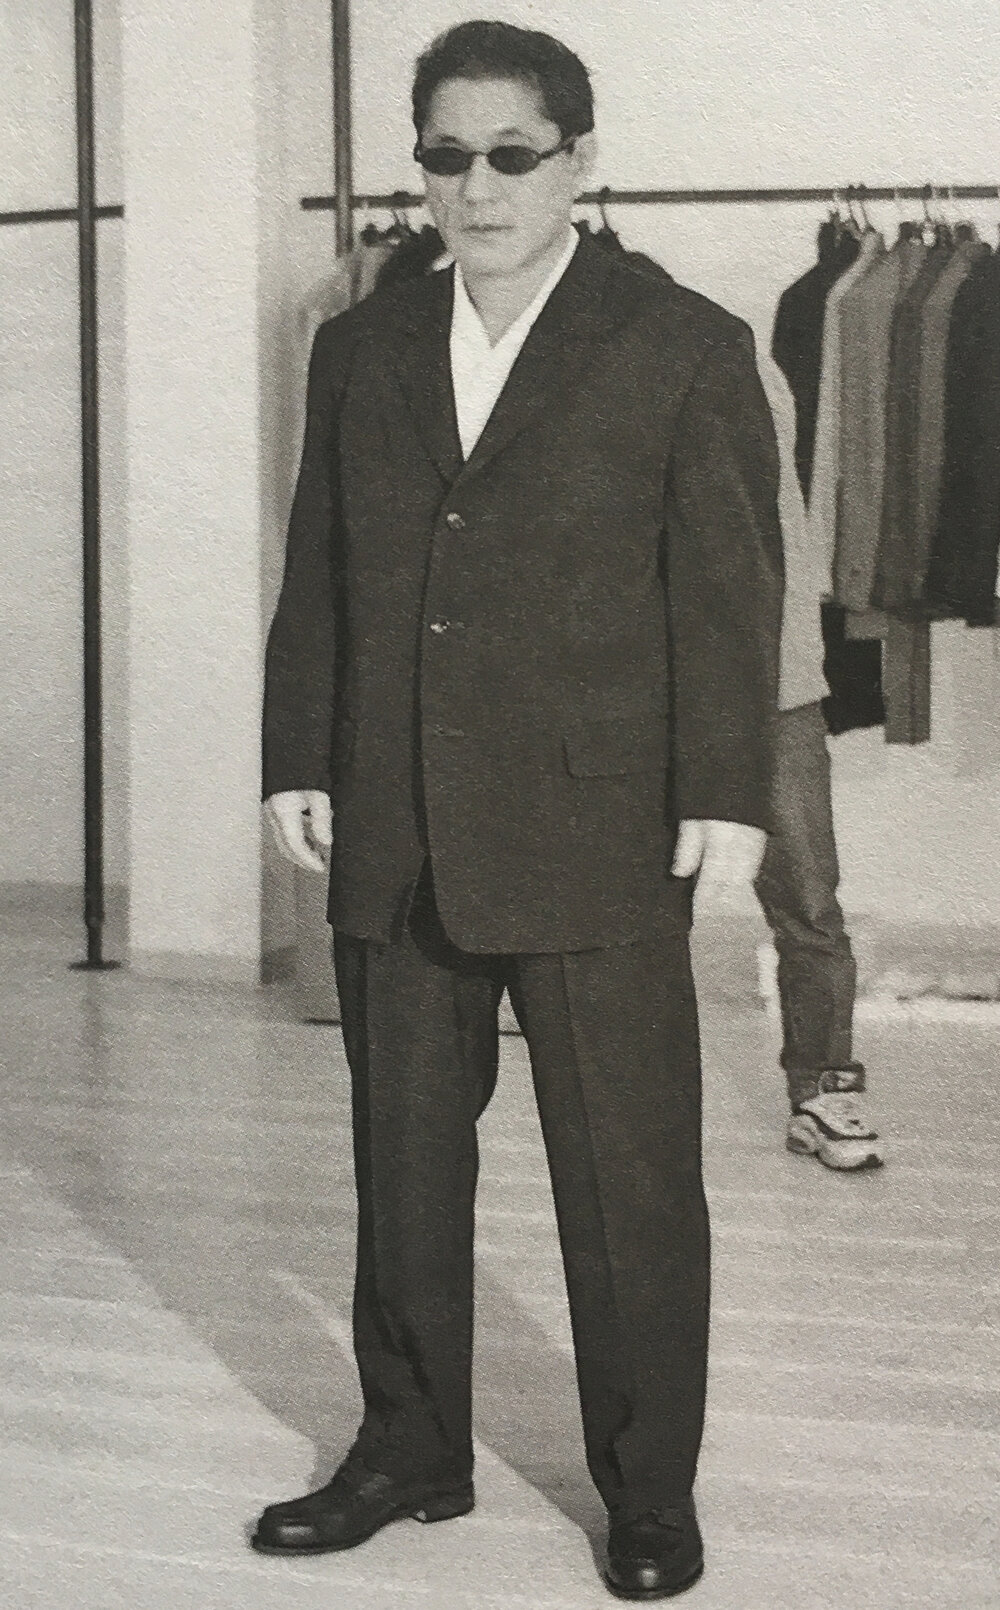 KITANO, Takeshi dir. During a fitting